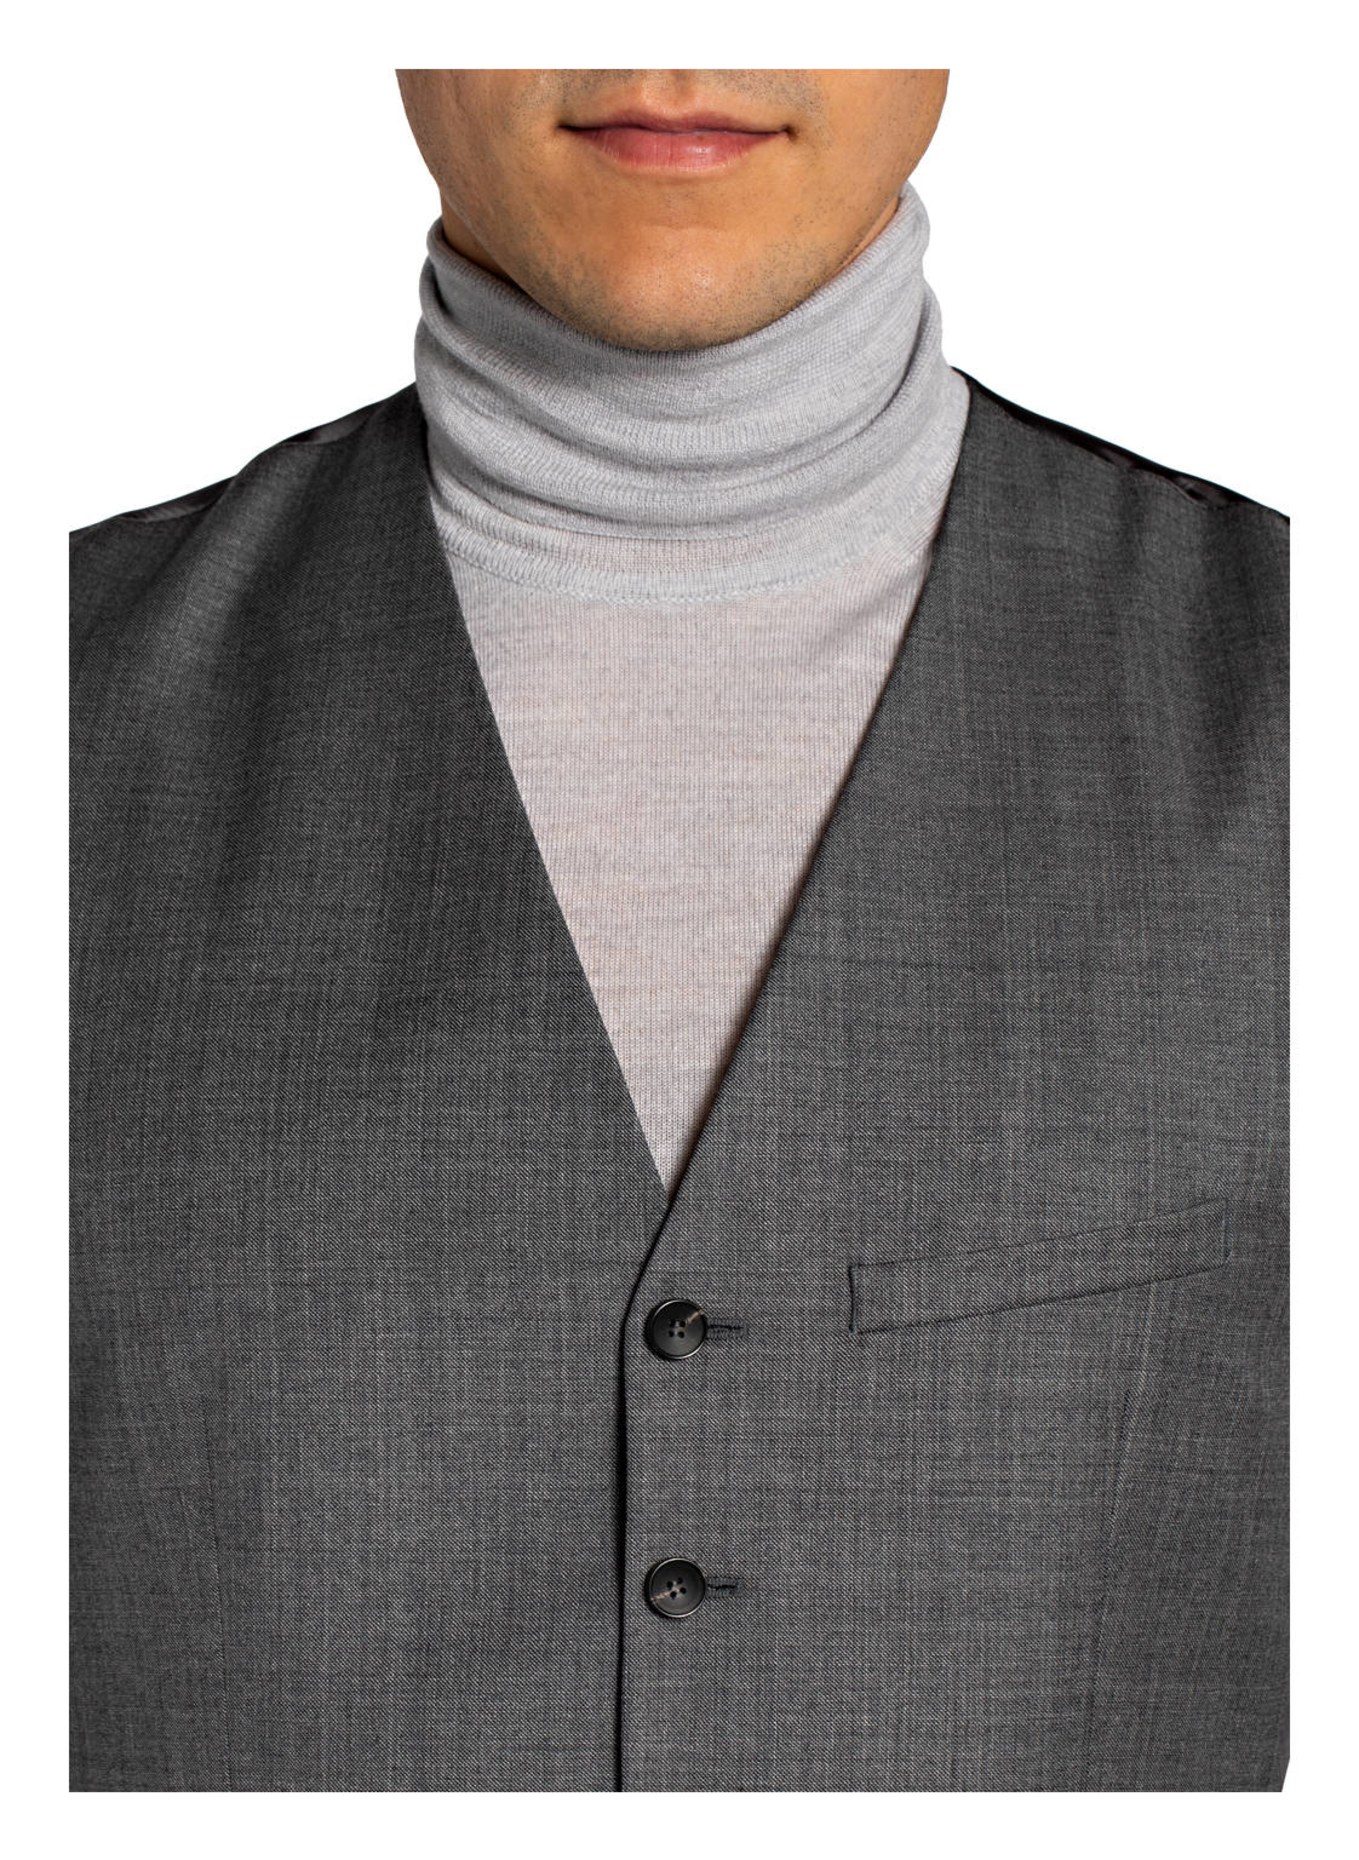 CG - CLUB of GENTS Suit jacket CURT slim fit, Color: 81 grau hell (Image 5)